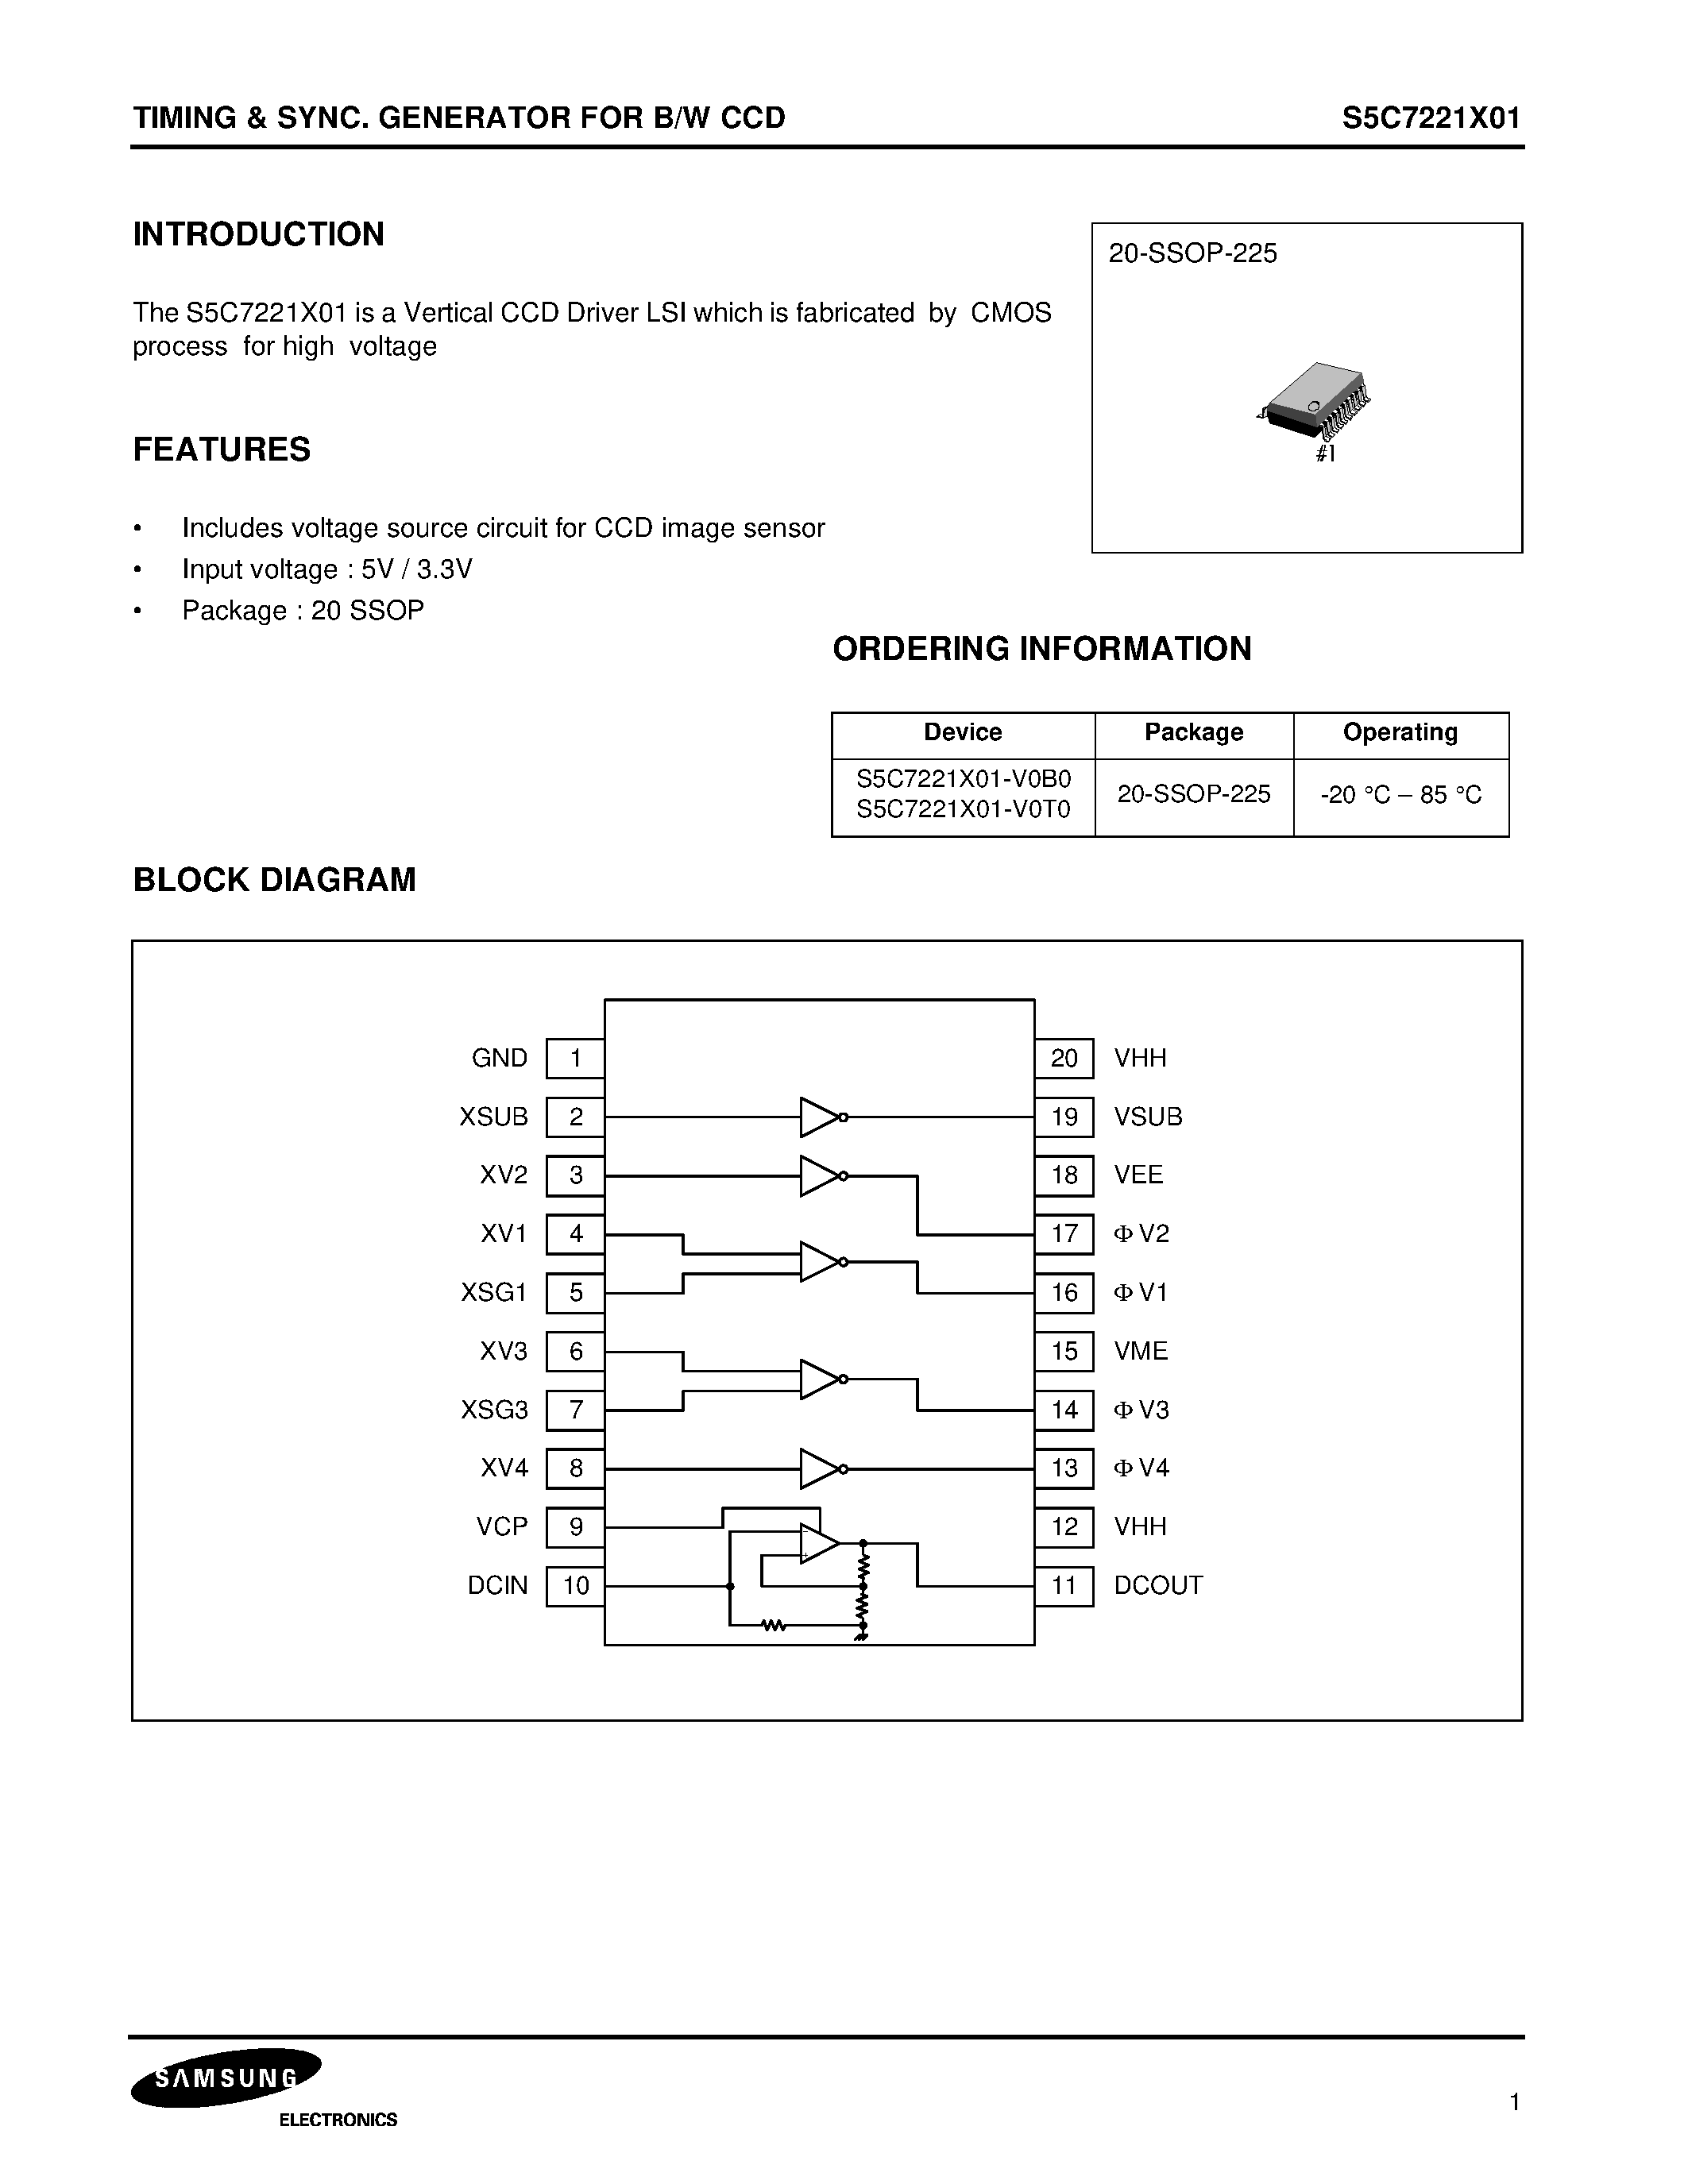 Datasheet S5C7221X01-V0B0 - TIMING & SYNC. GENERATOR FOR B/W CCD page 1